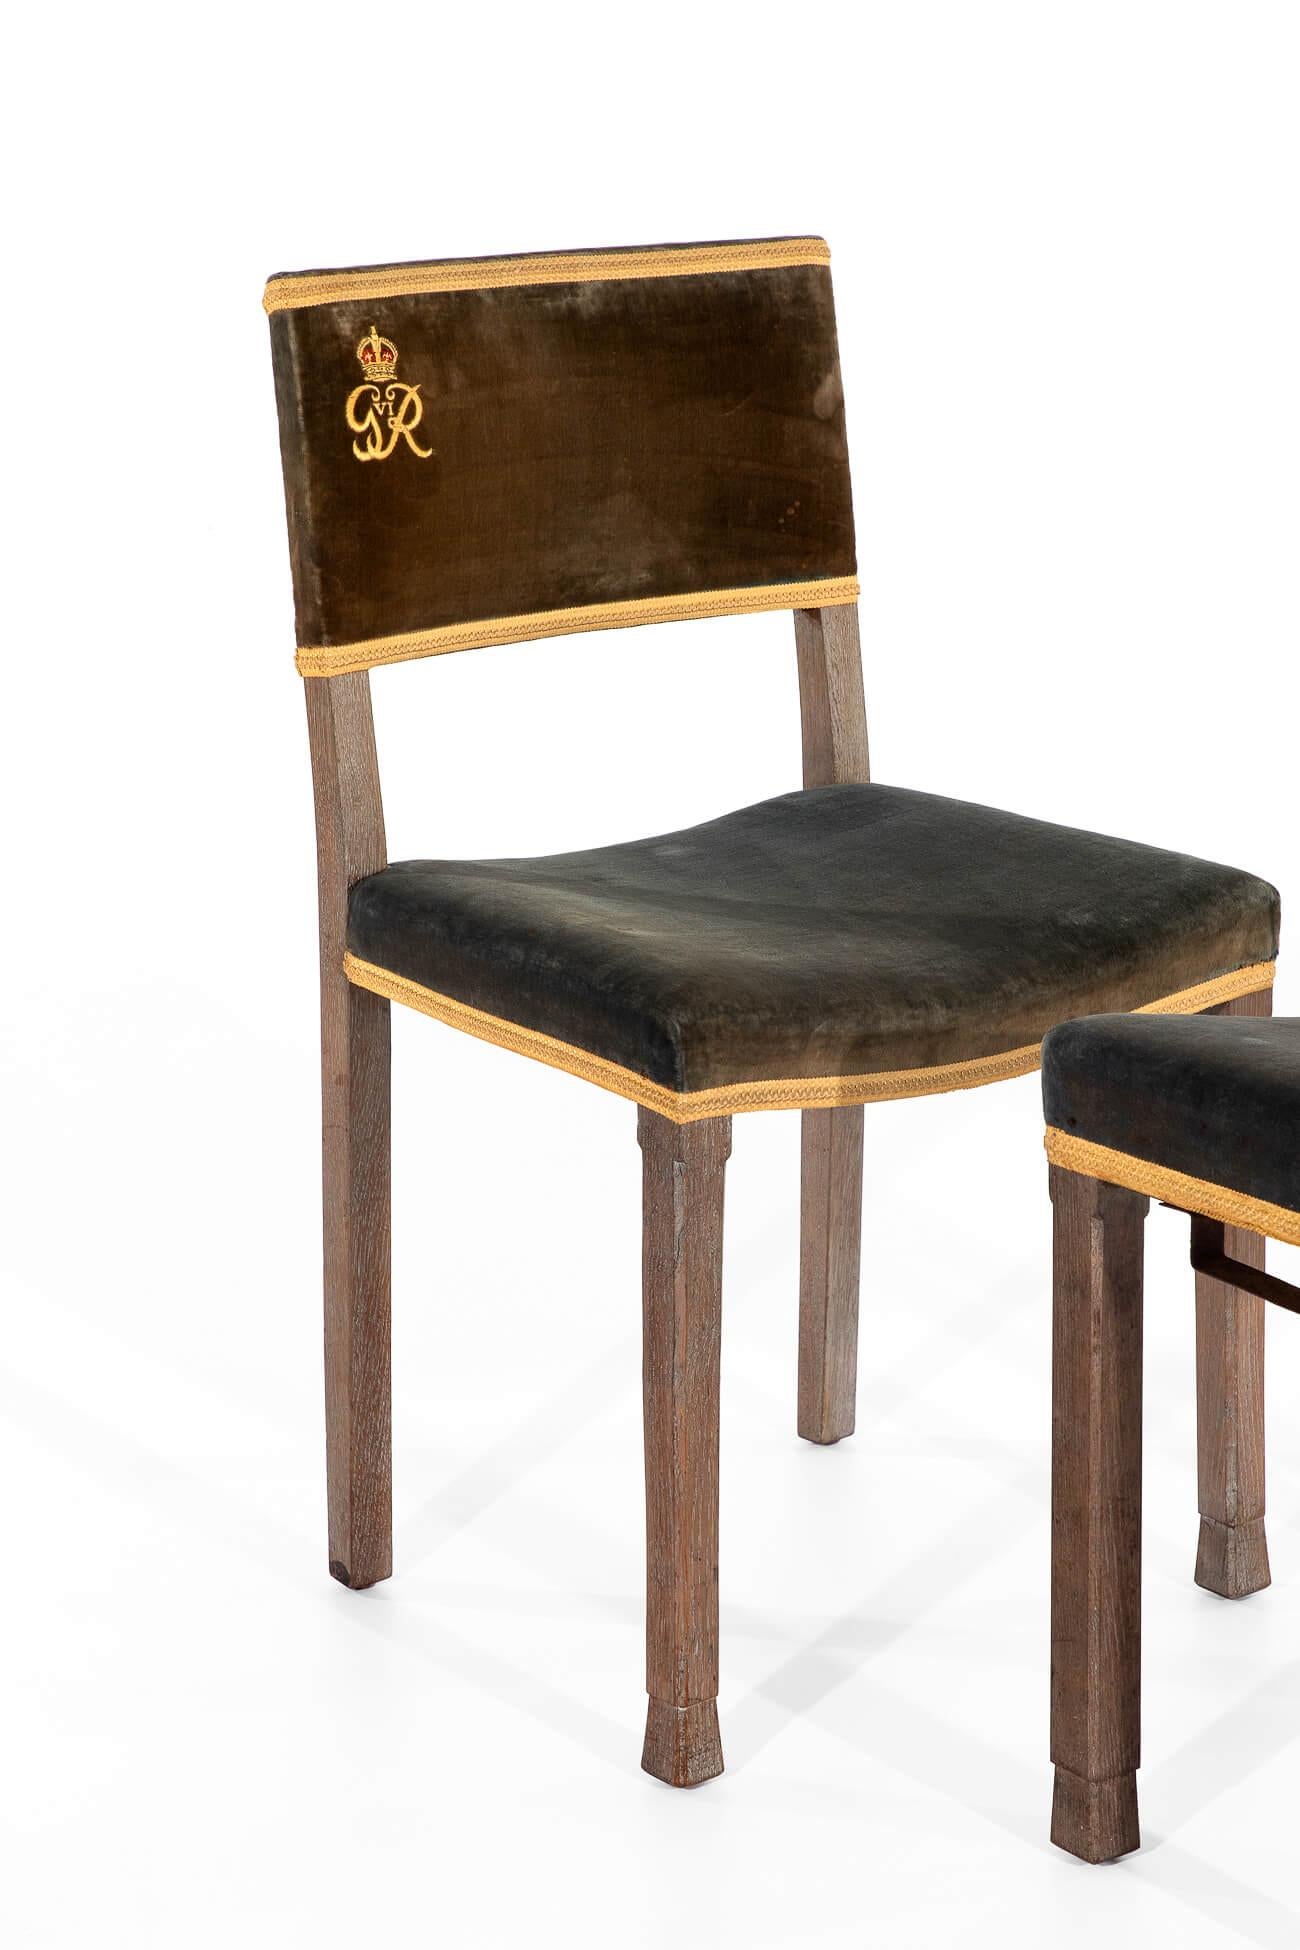 Velvet A George VI 1937 Coronation Chair and Stool